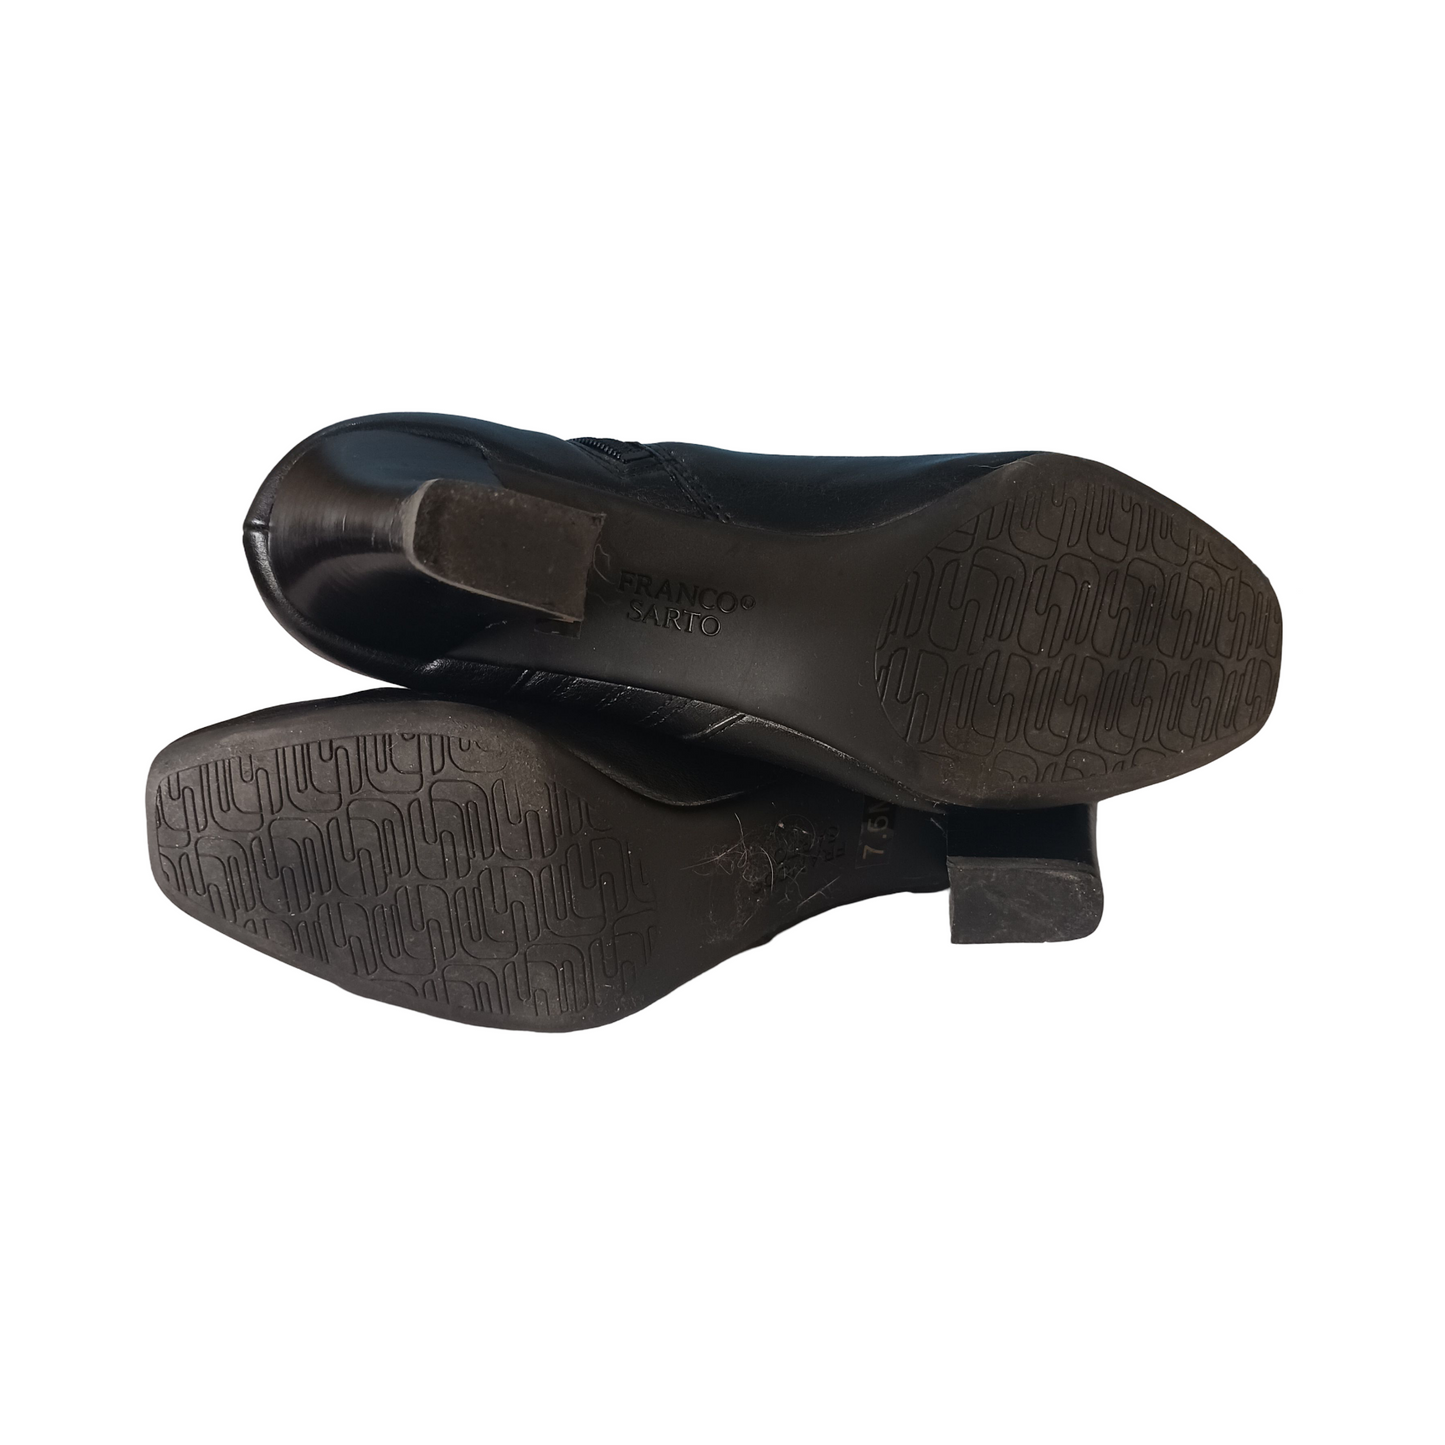 Franco Sarto Black Ankle Boots, Size US 7.5